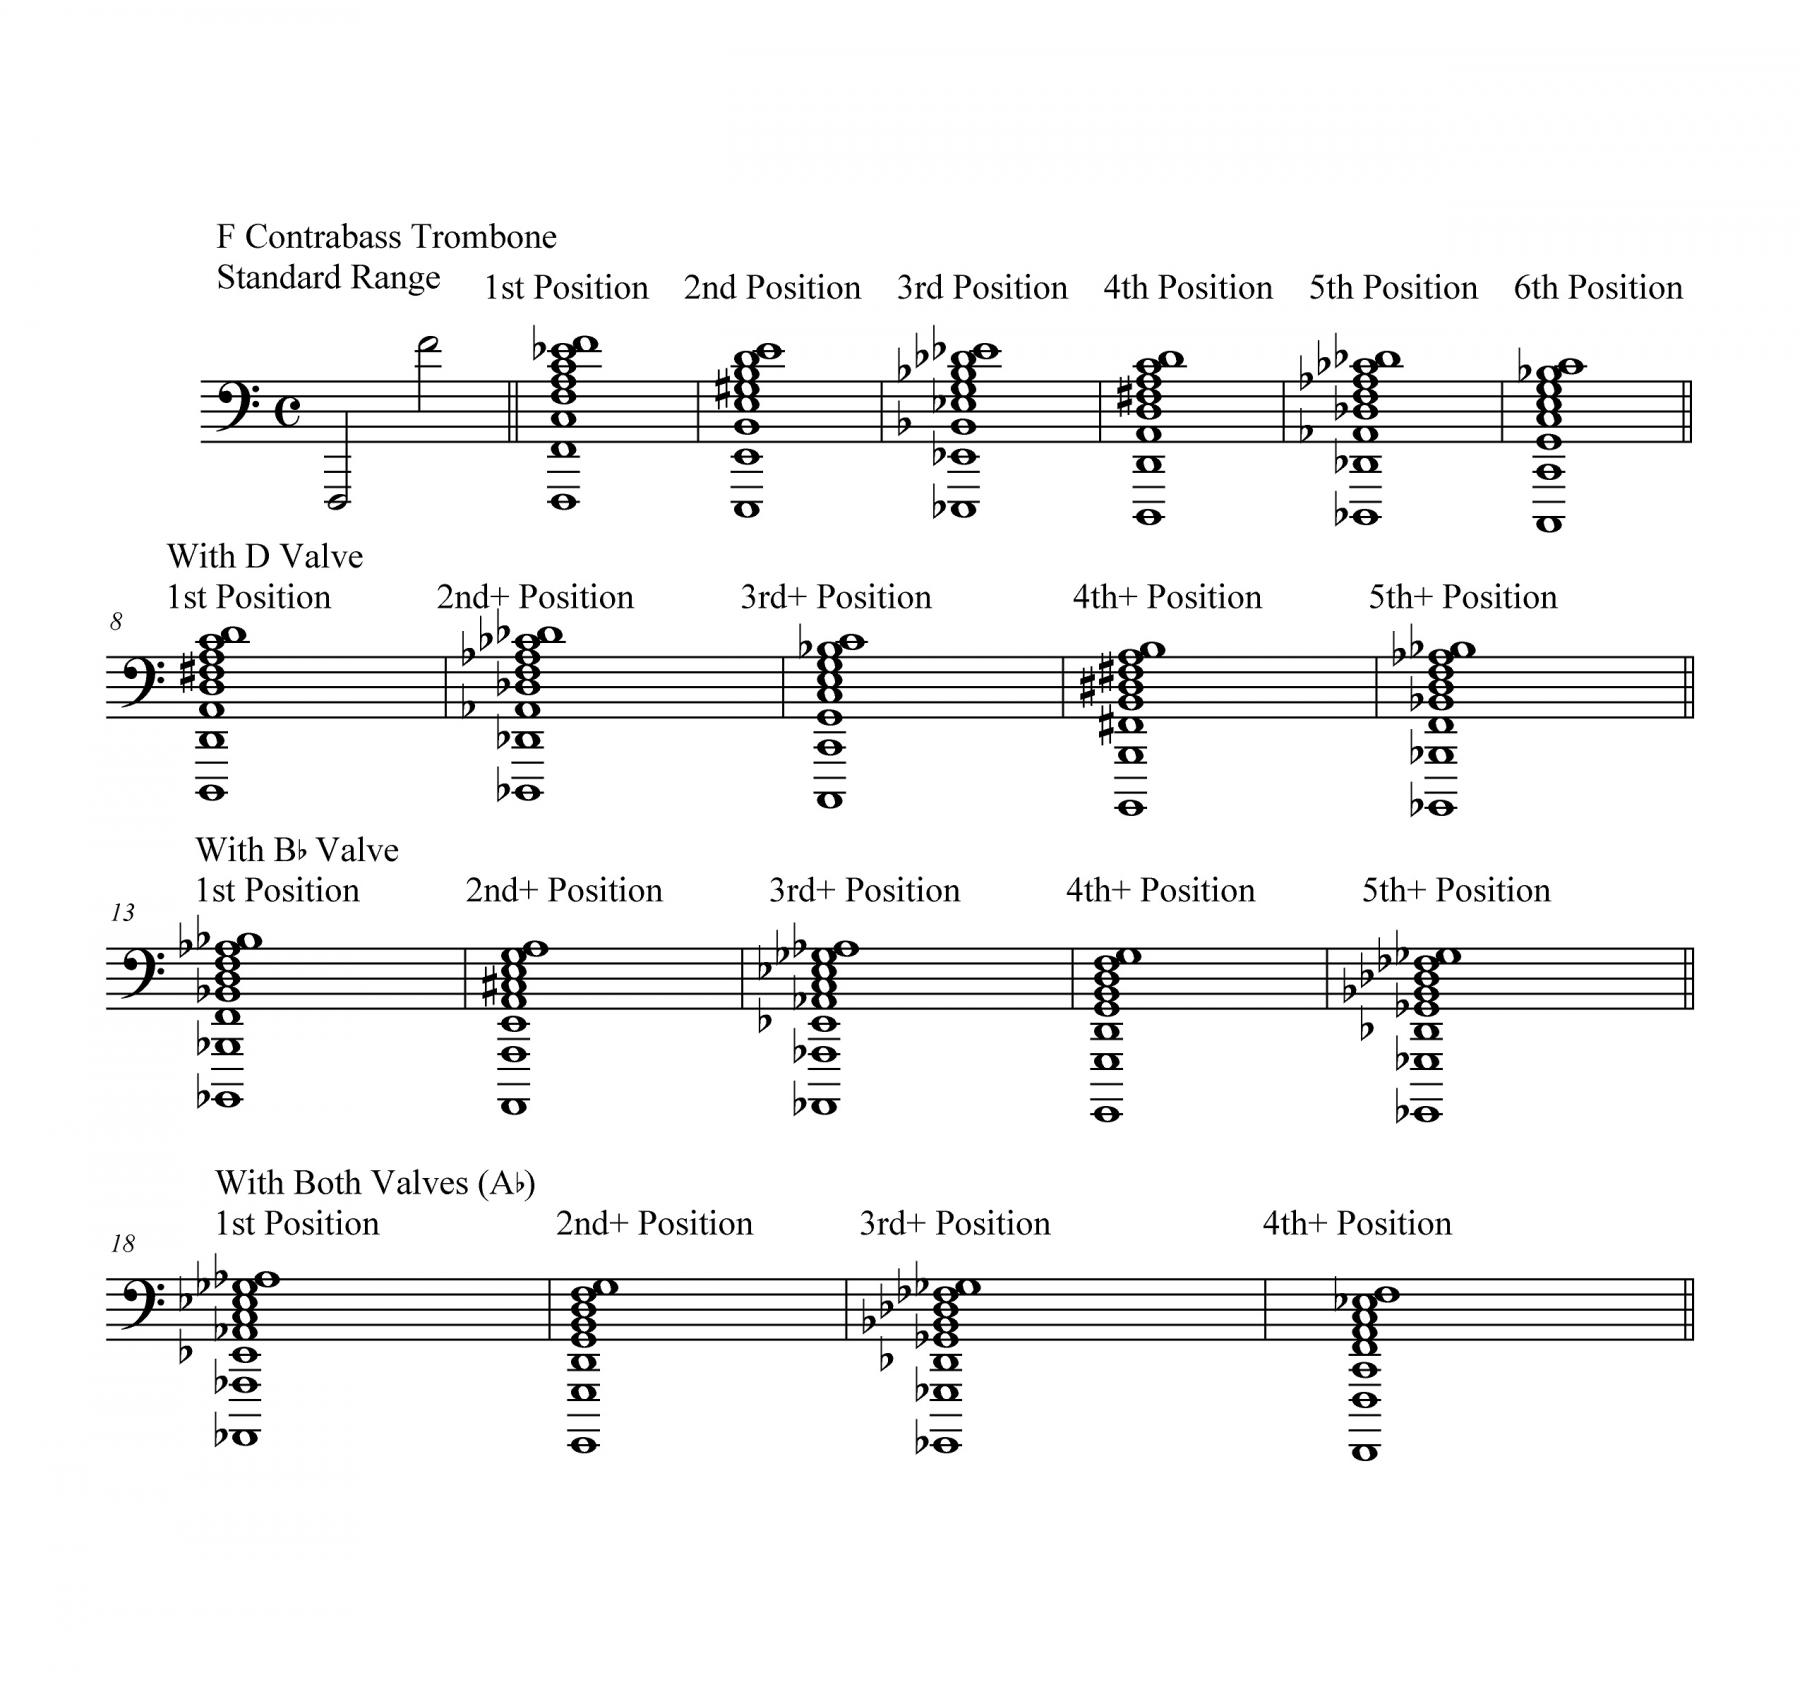 trombone positions chart low